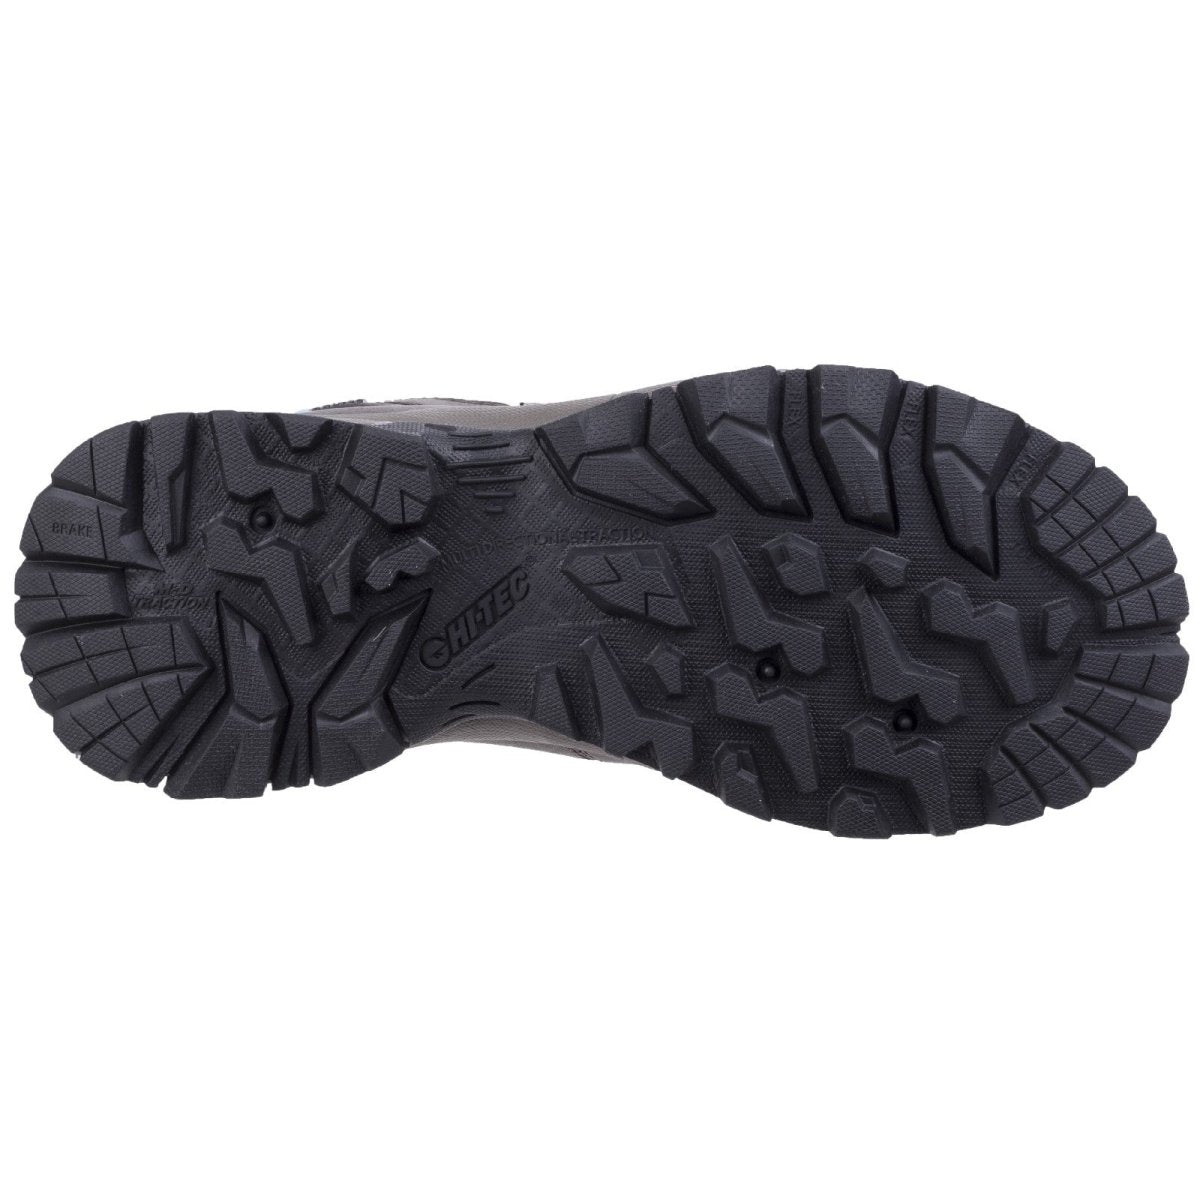 Hi-Tec Eurotrek Lite Waterproof Mens Hiking Boots - Shoe Store Direct